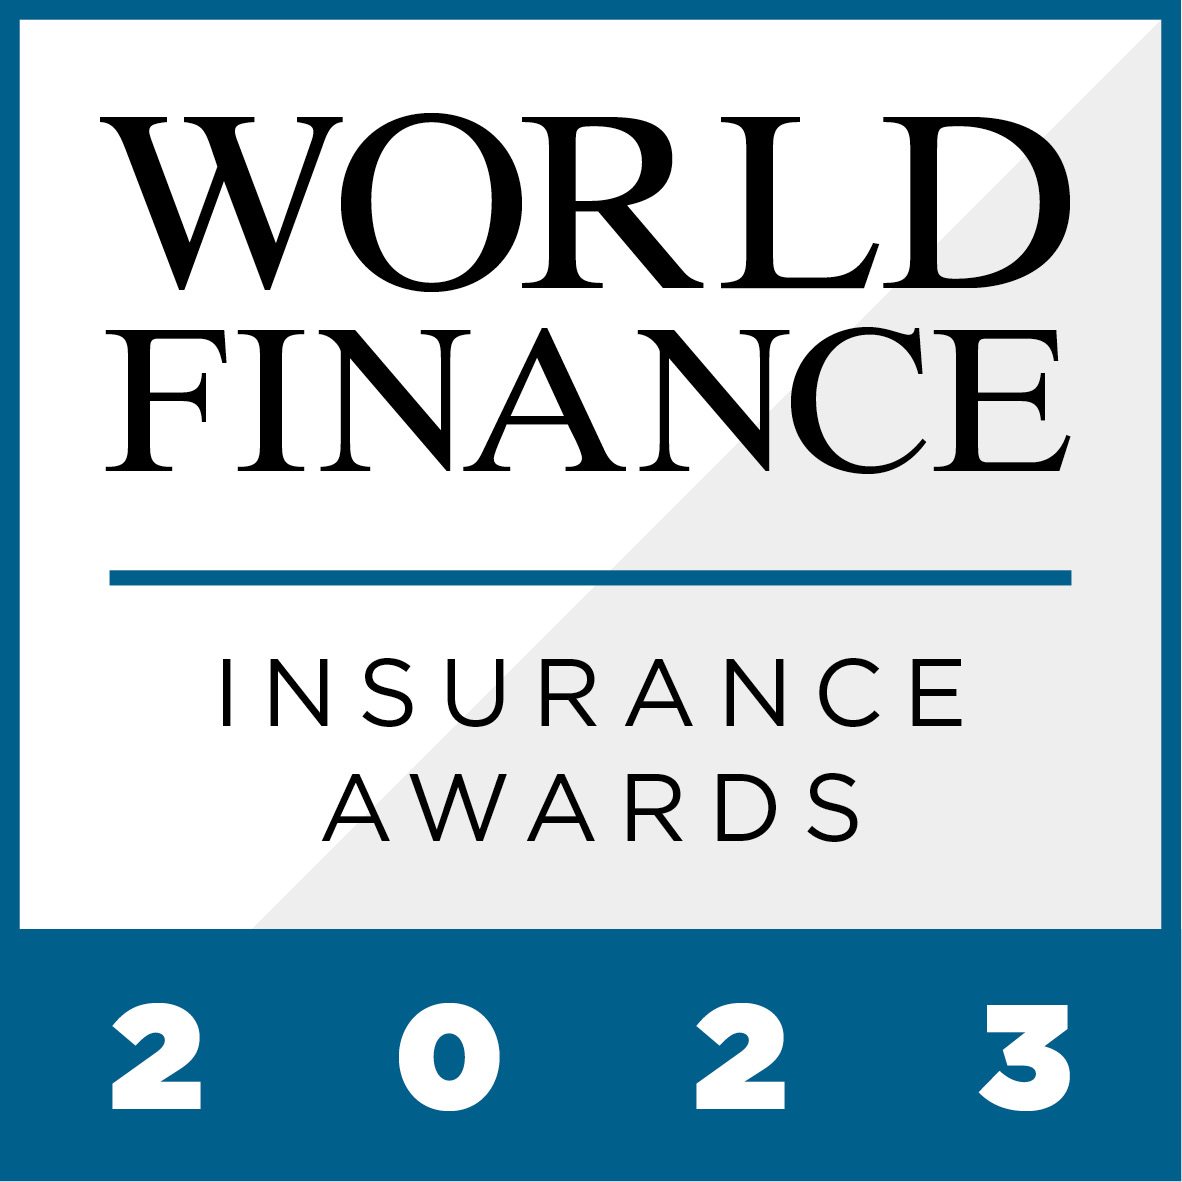 The winners of the World Finance Insurance Awards 2023